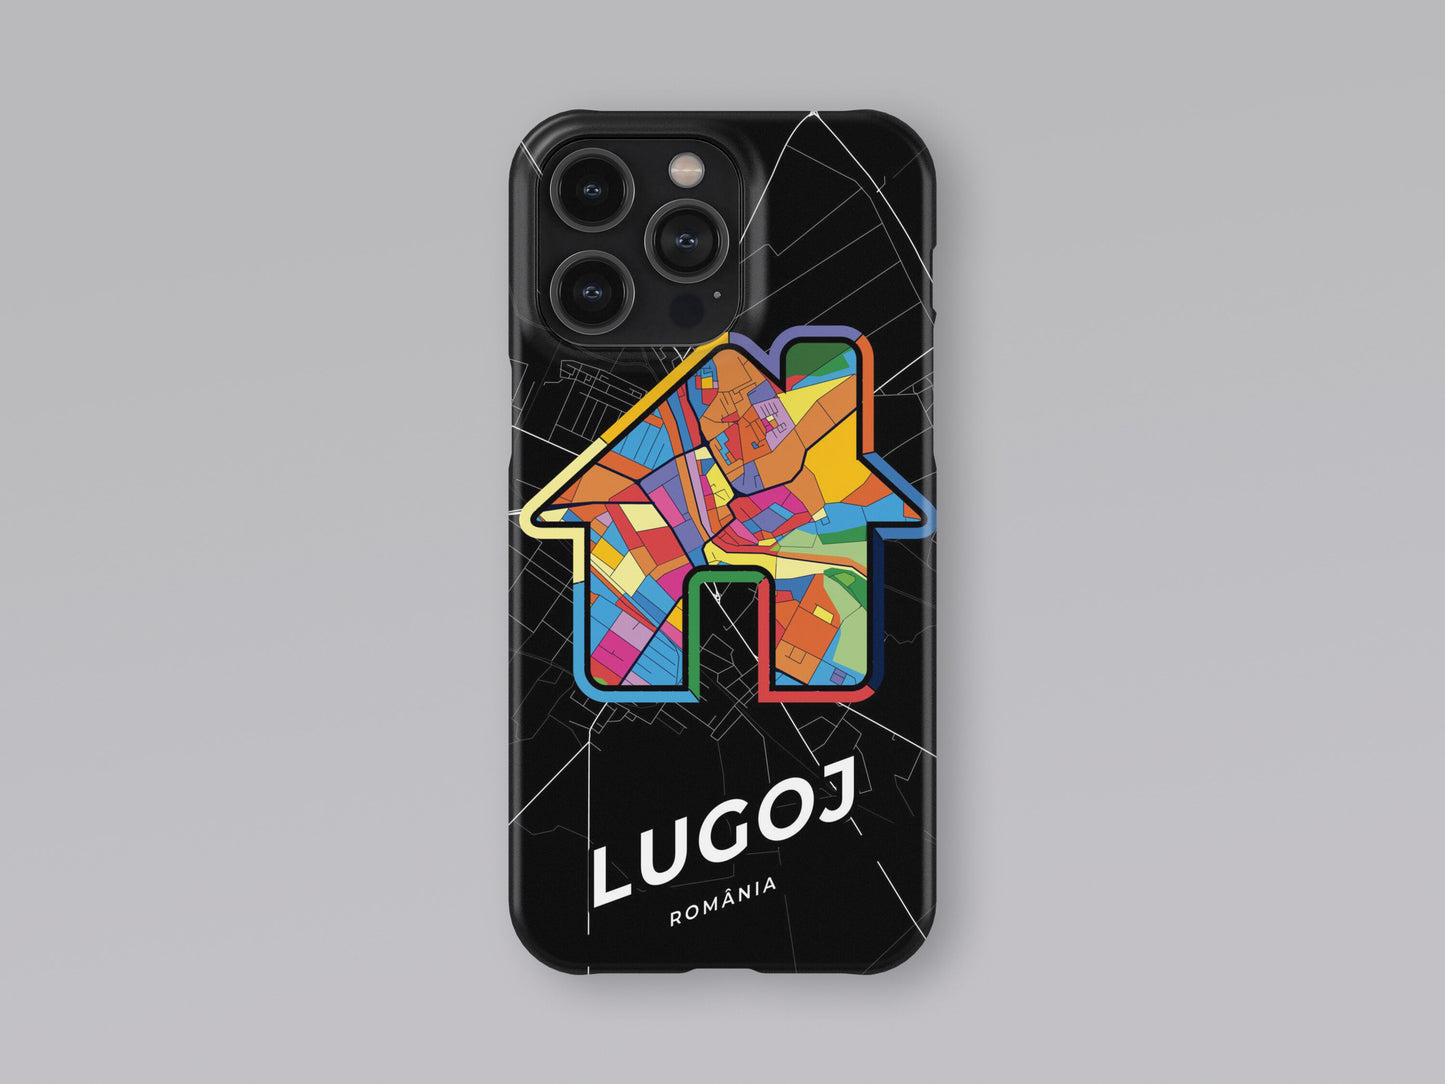 Lugoj Romania slim phone case with colorful icon. Birthday, wedding or housewarming gift. Couple match cases. 3